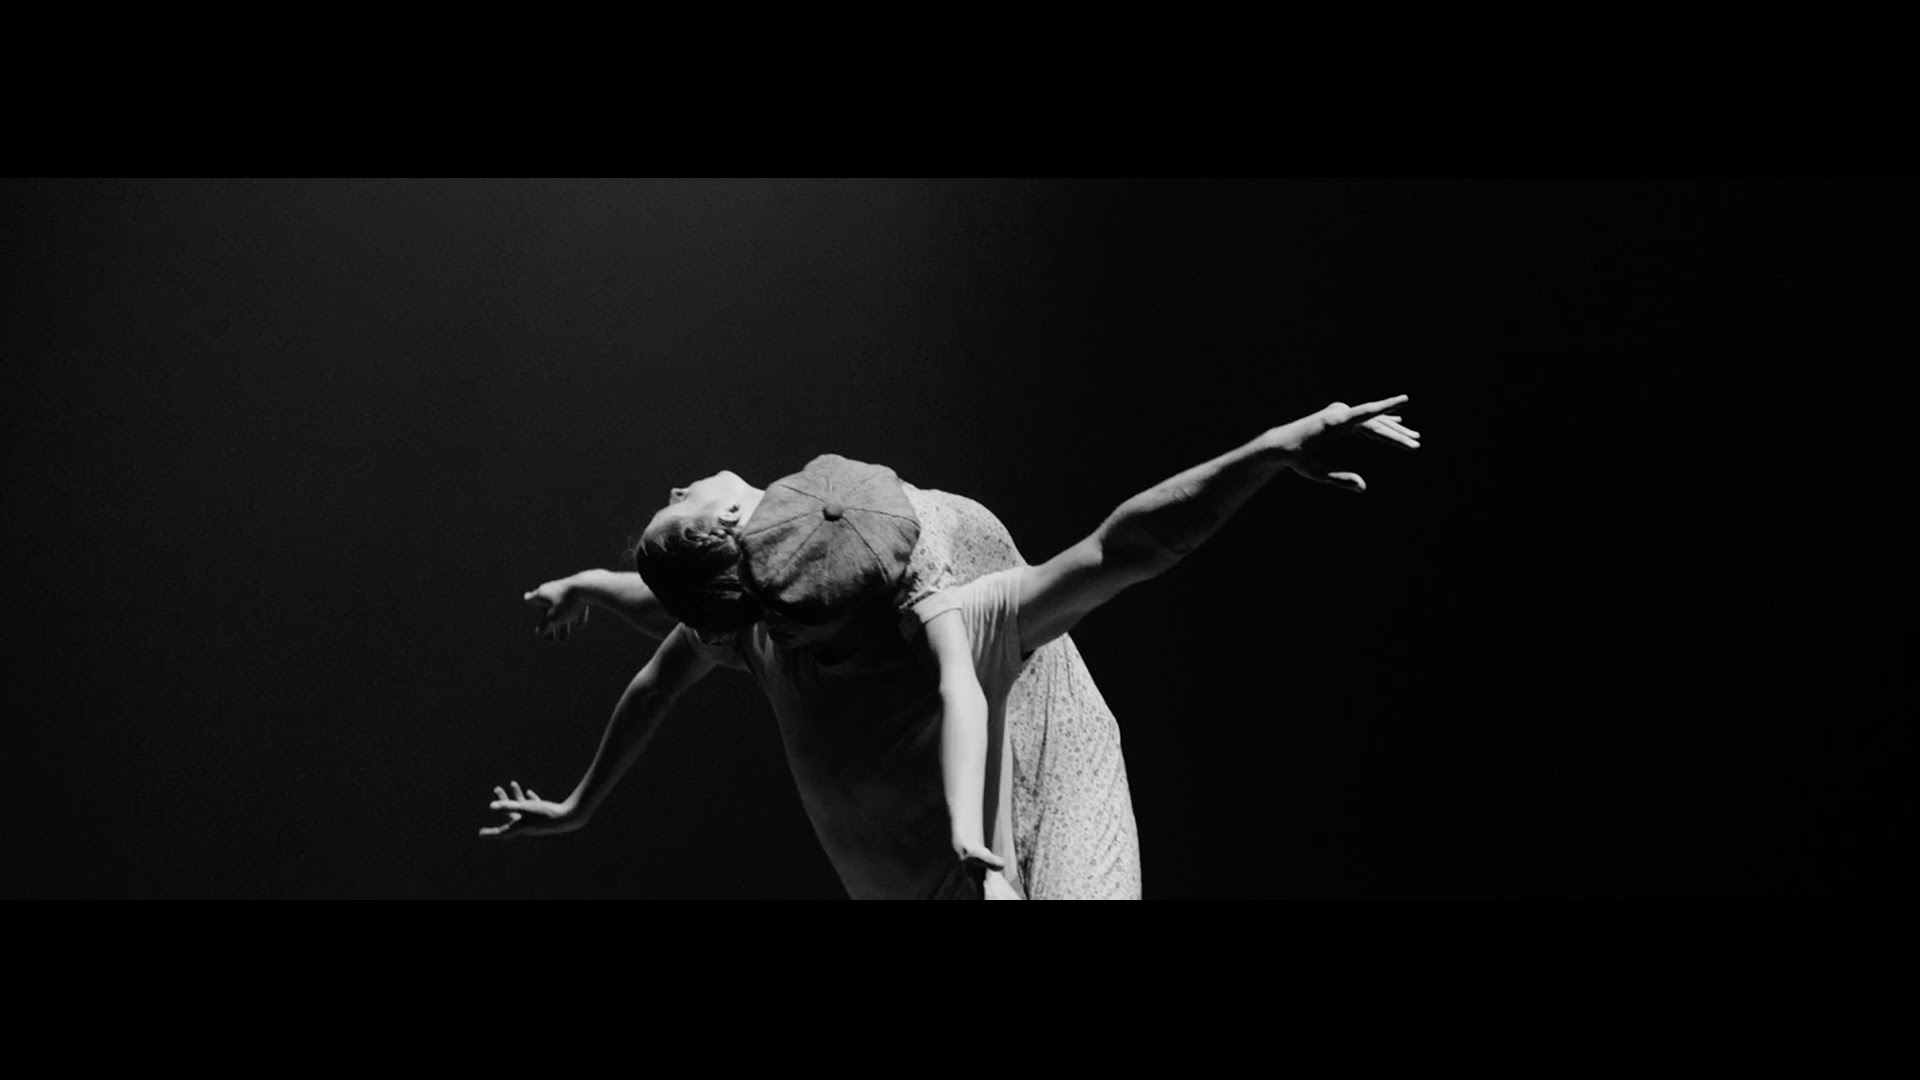 English National Ballet’s Digital Season – New Dance Film